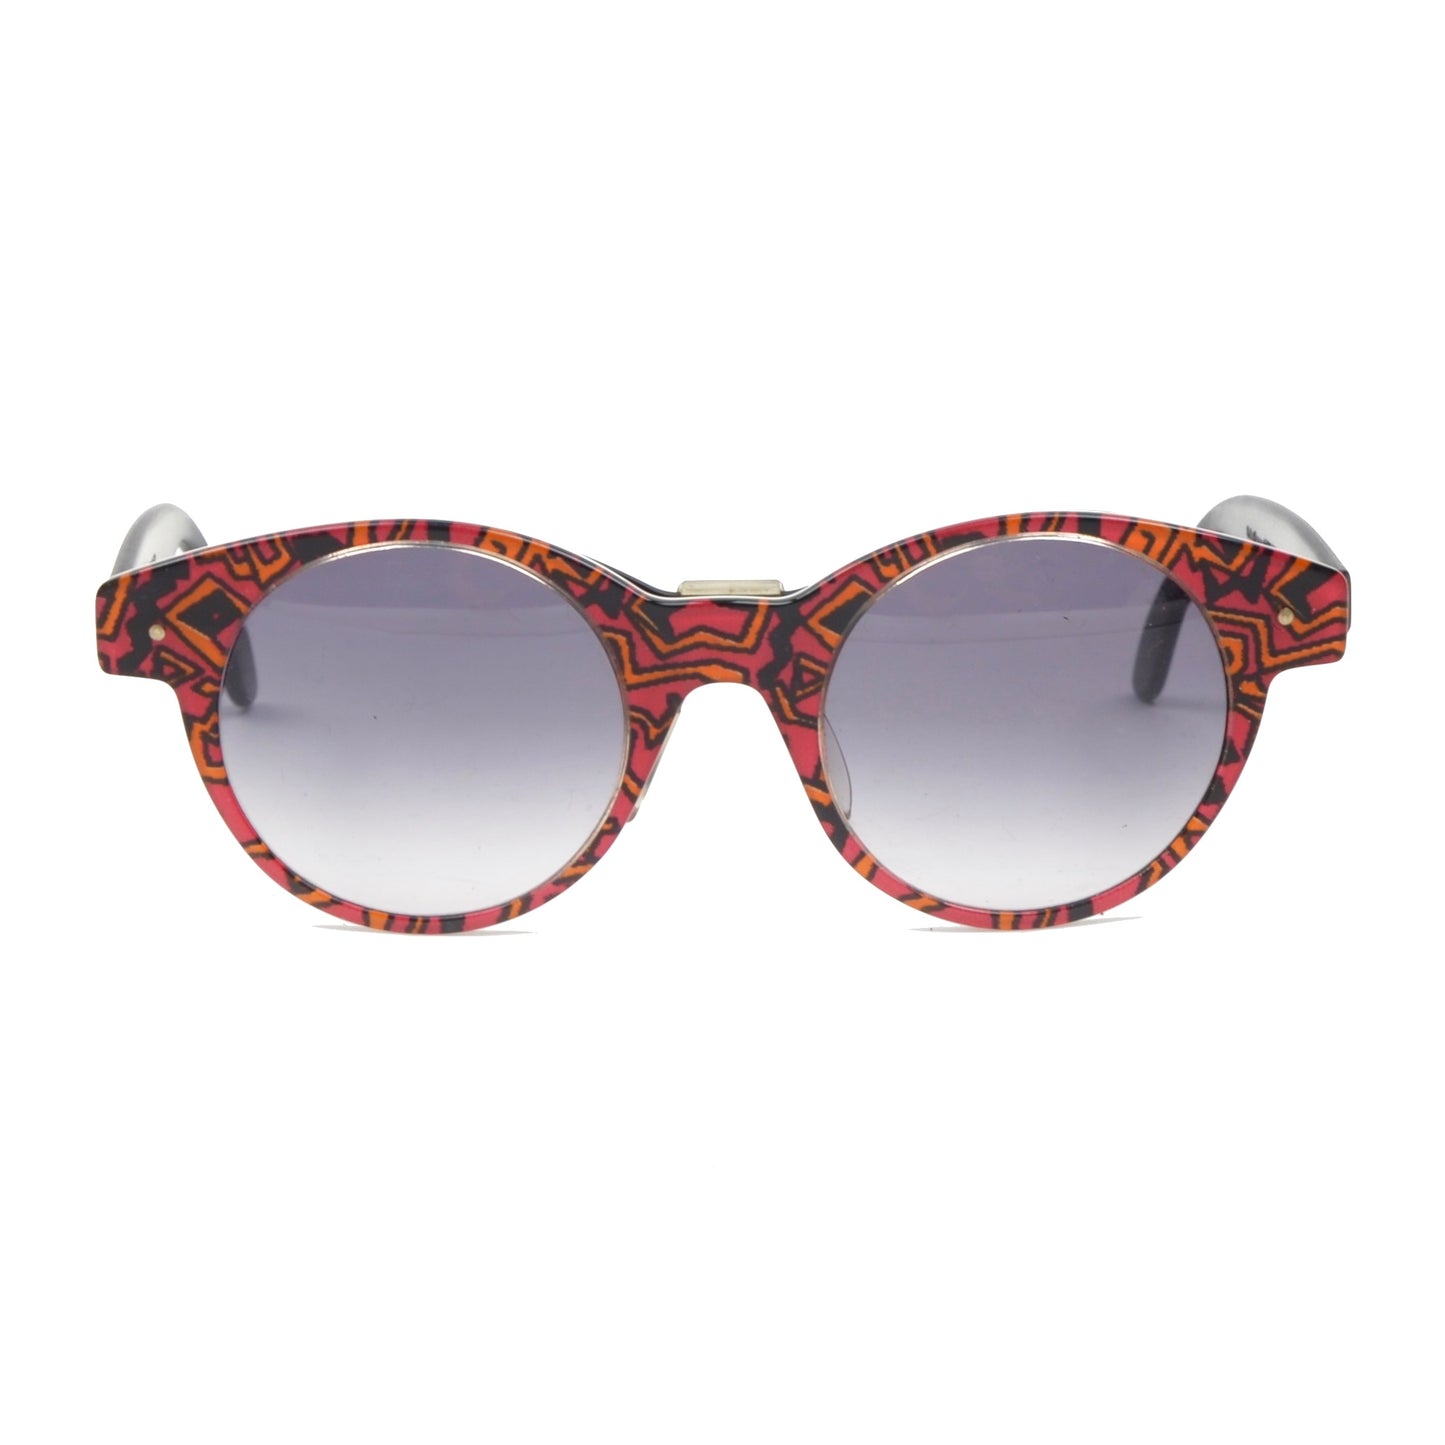 Swatch Eyes Sunglasses - Interchangeable Lenses